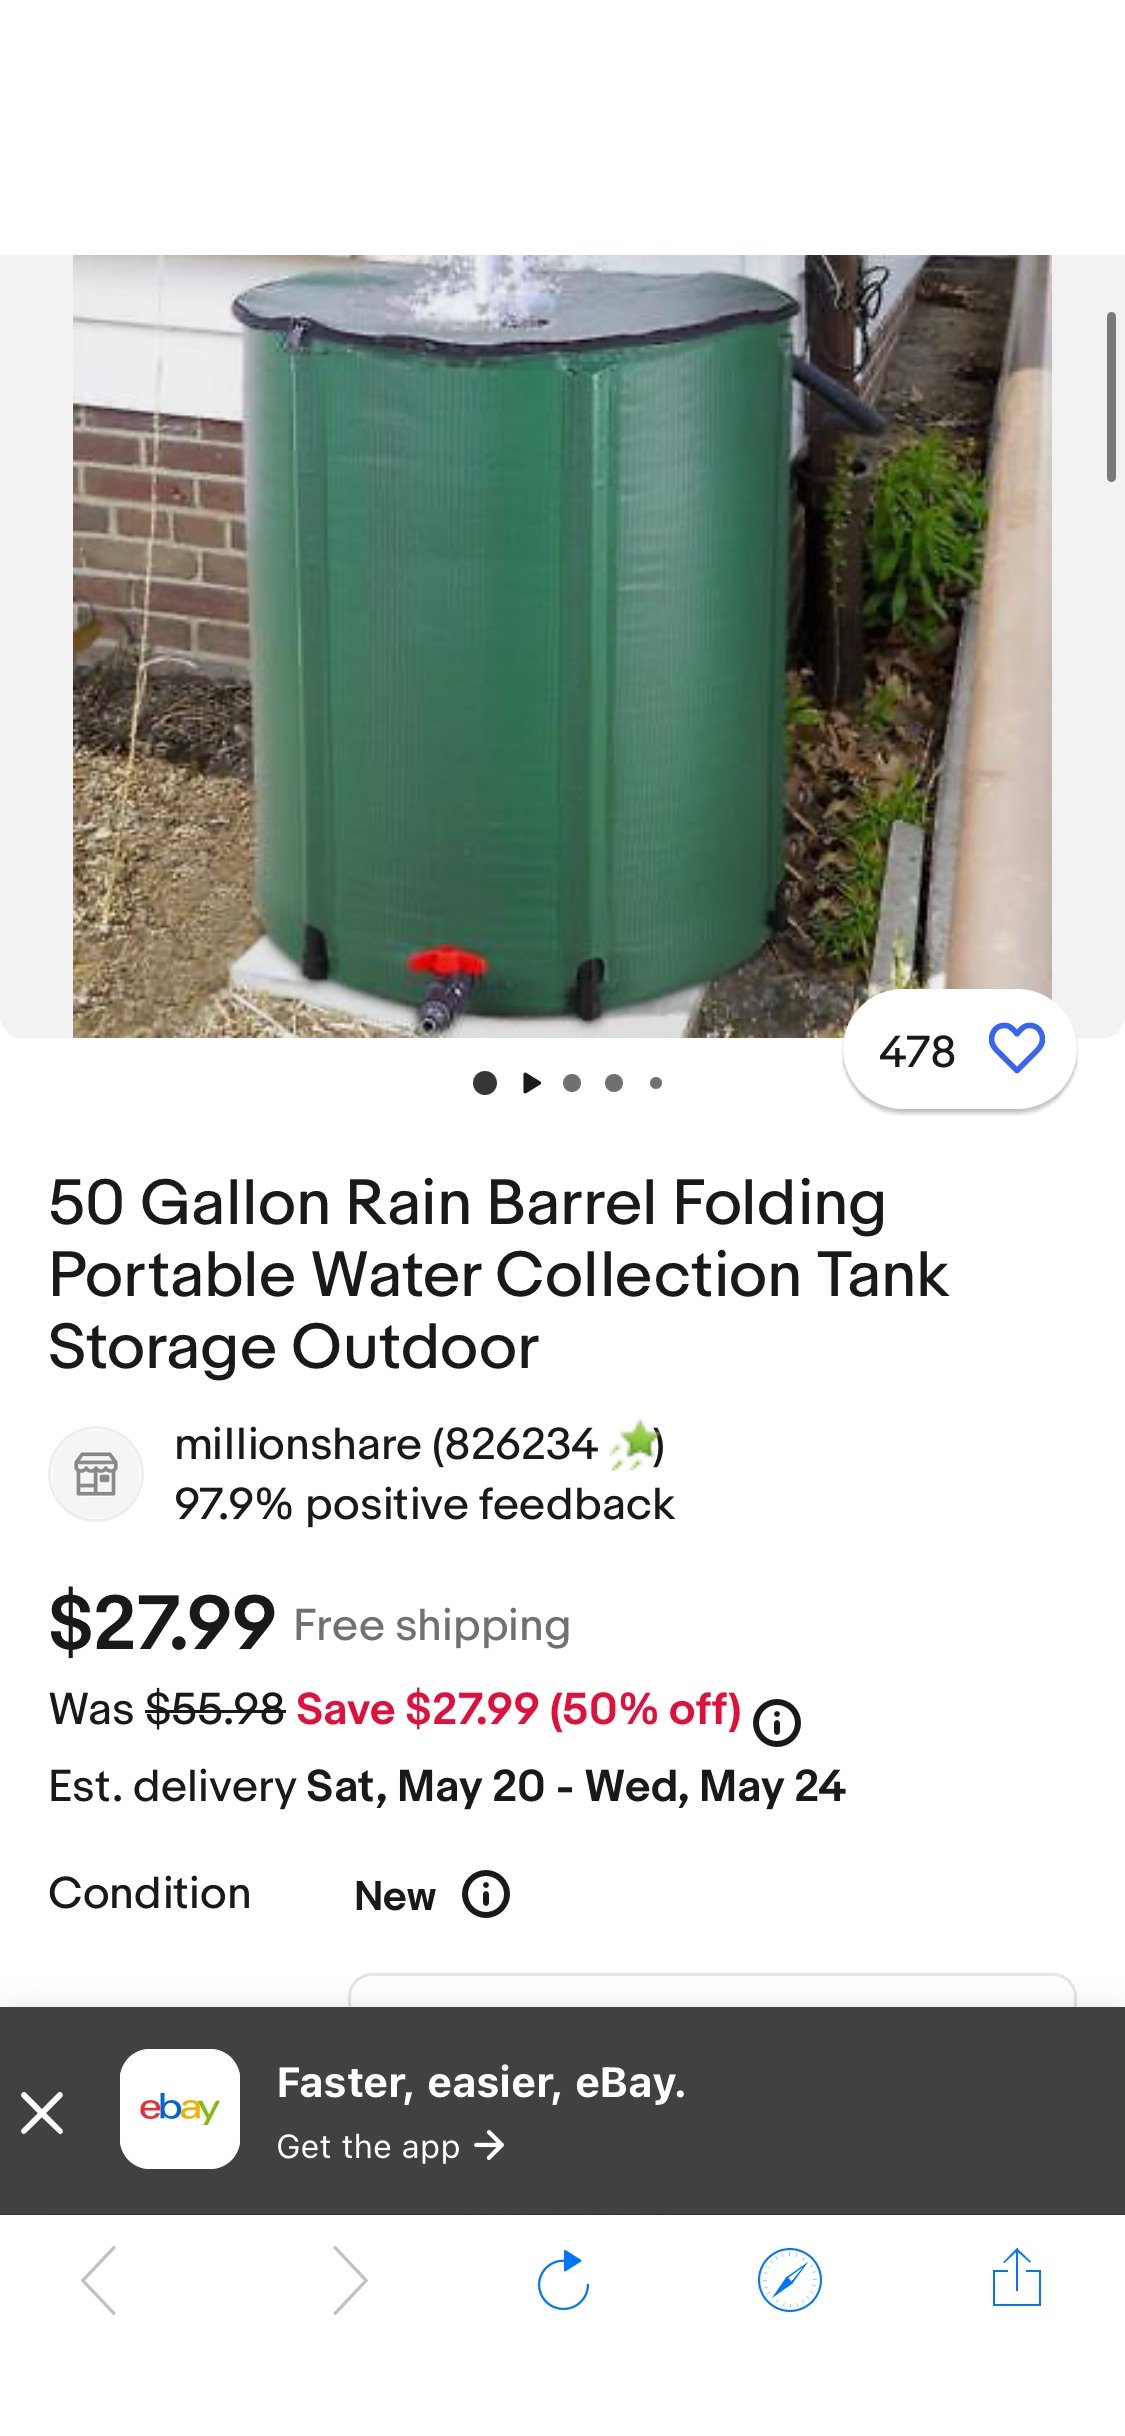 50 Gallon Rain Barrel Folding Portable Water Collection Tank Storage Outdoor | eBay